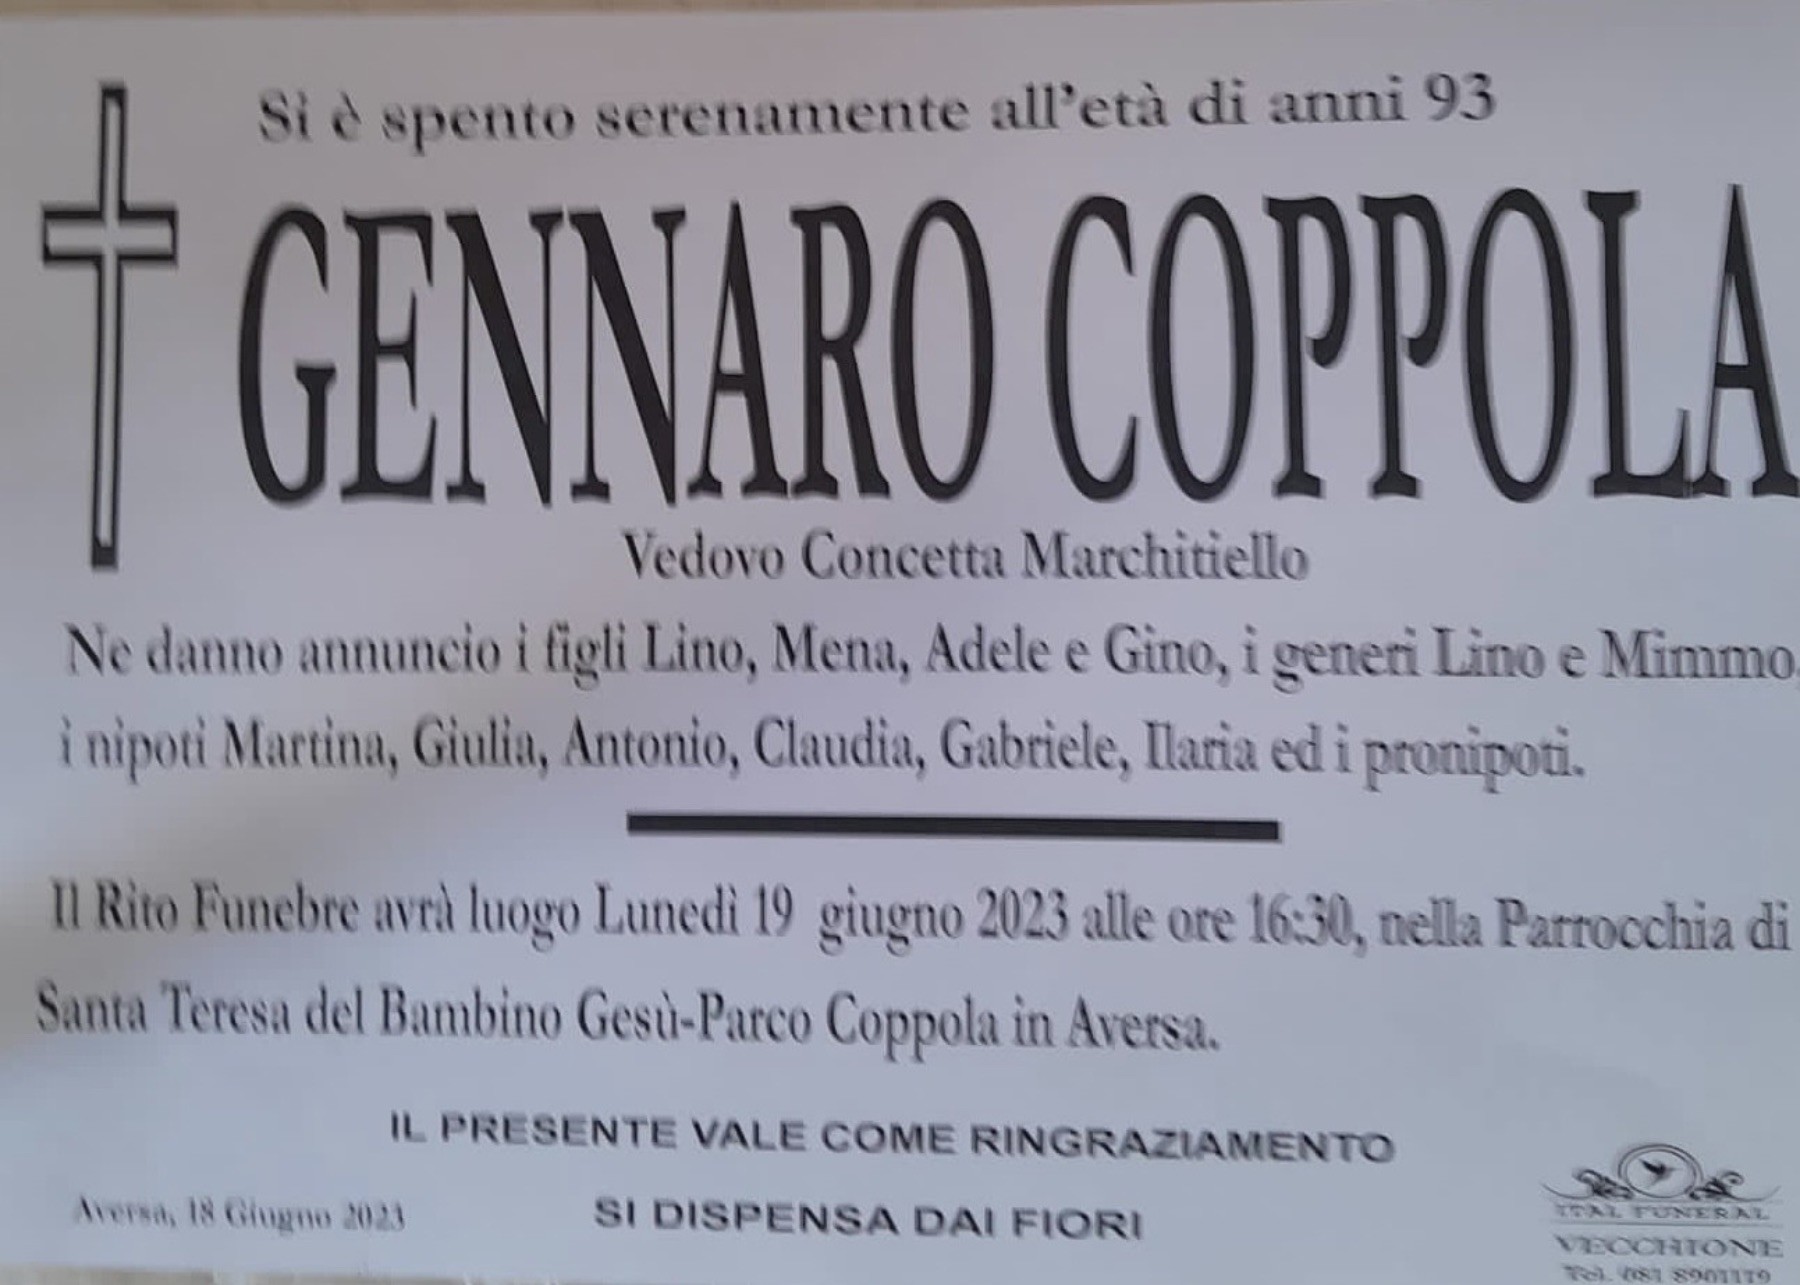 Gennaro Coppola